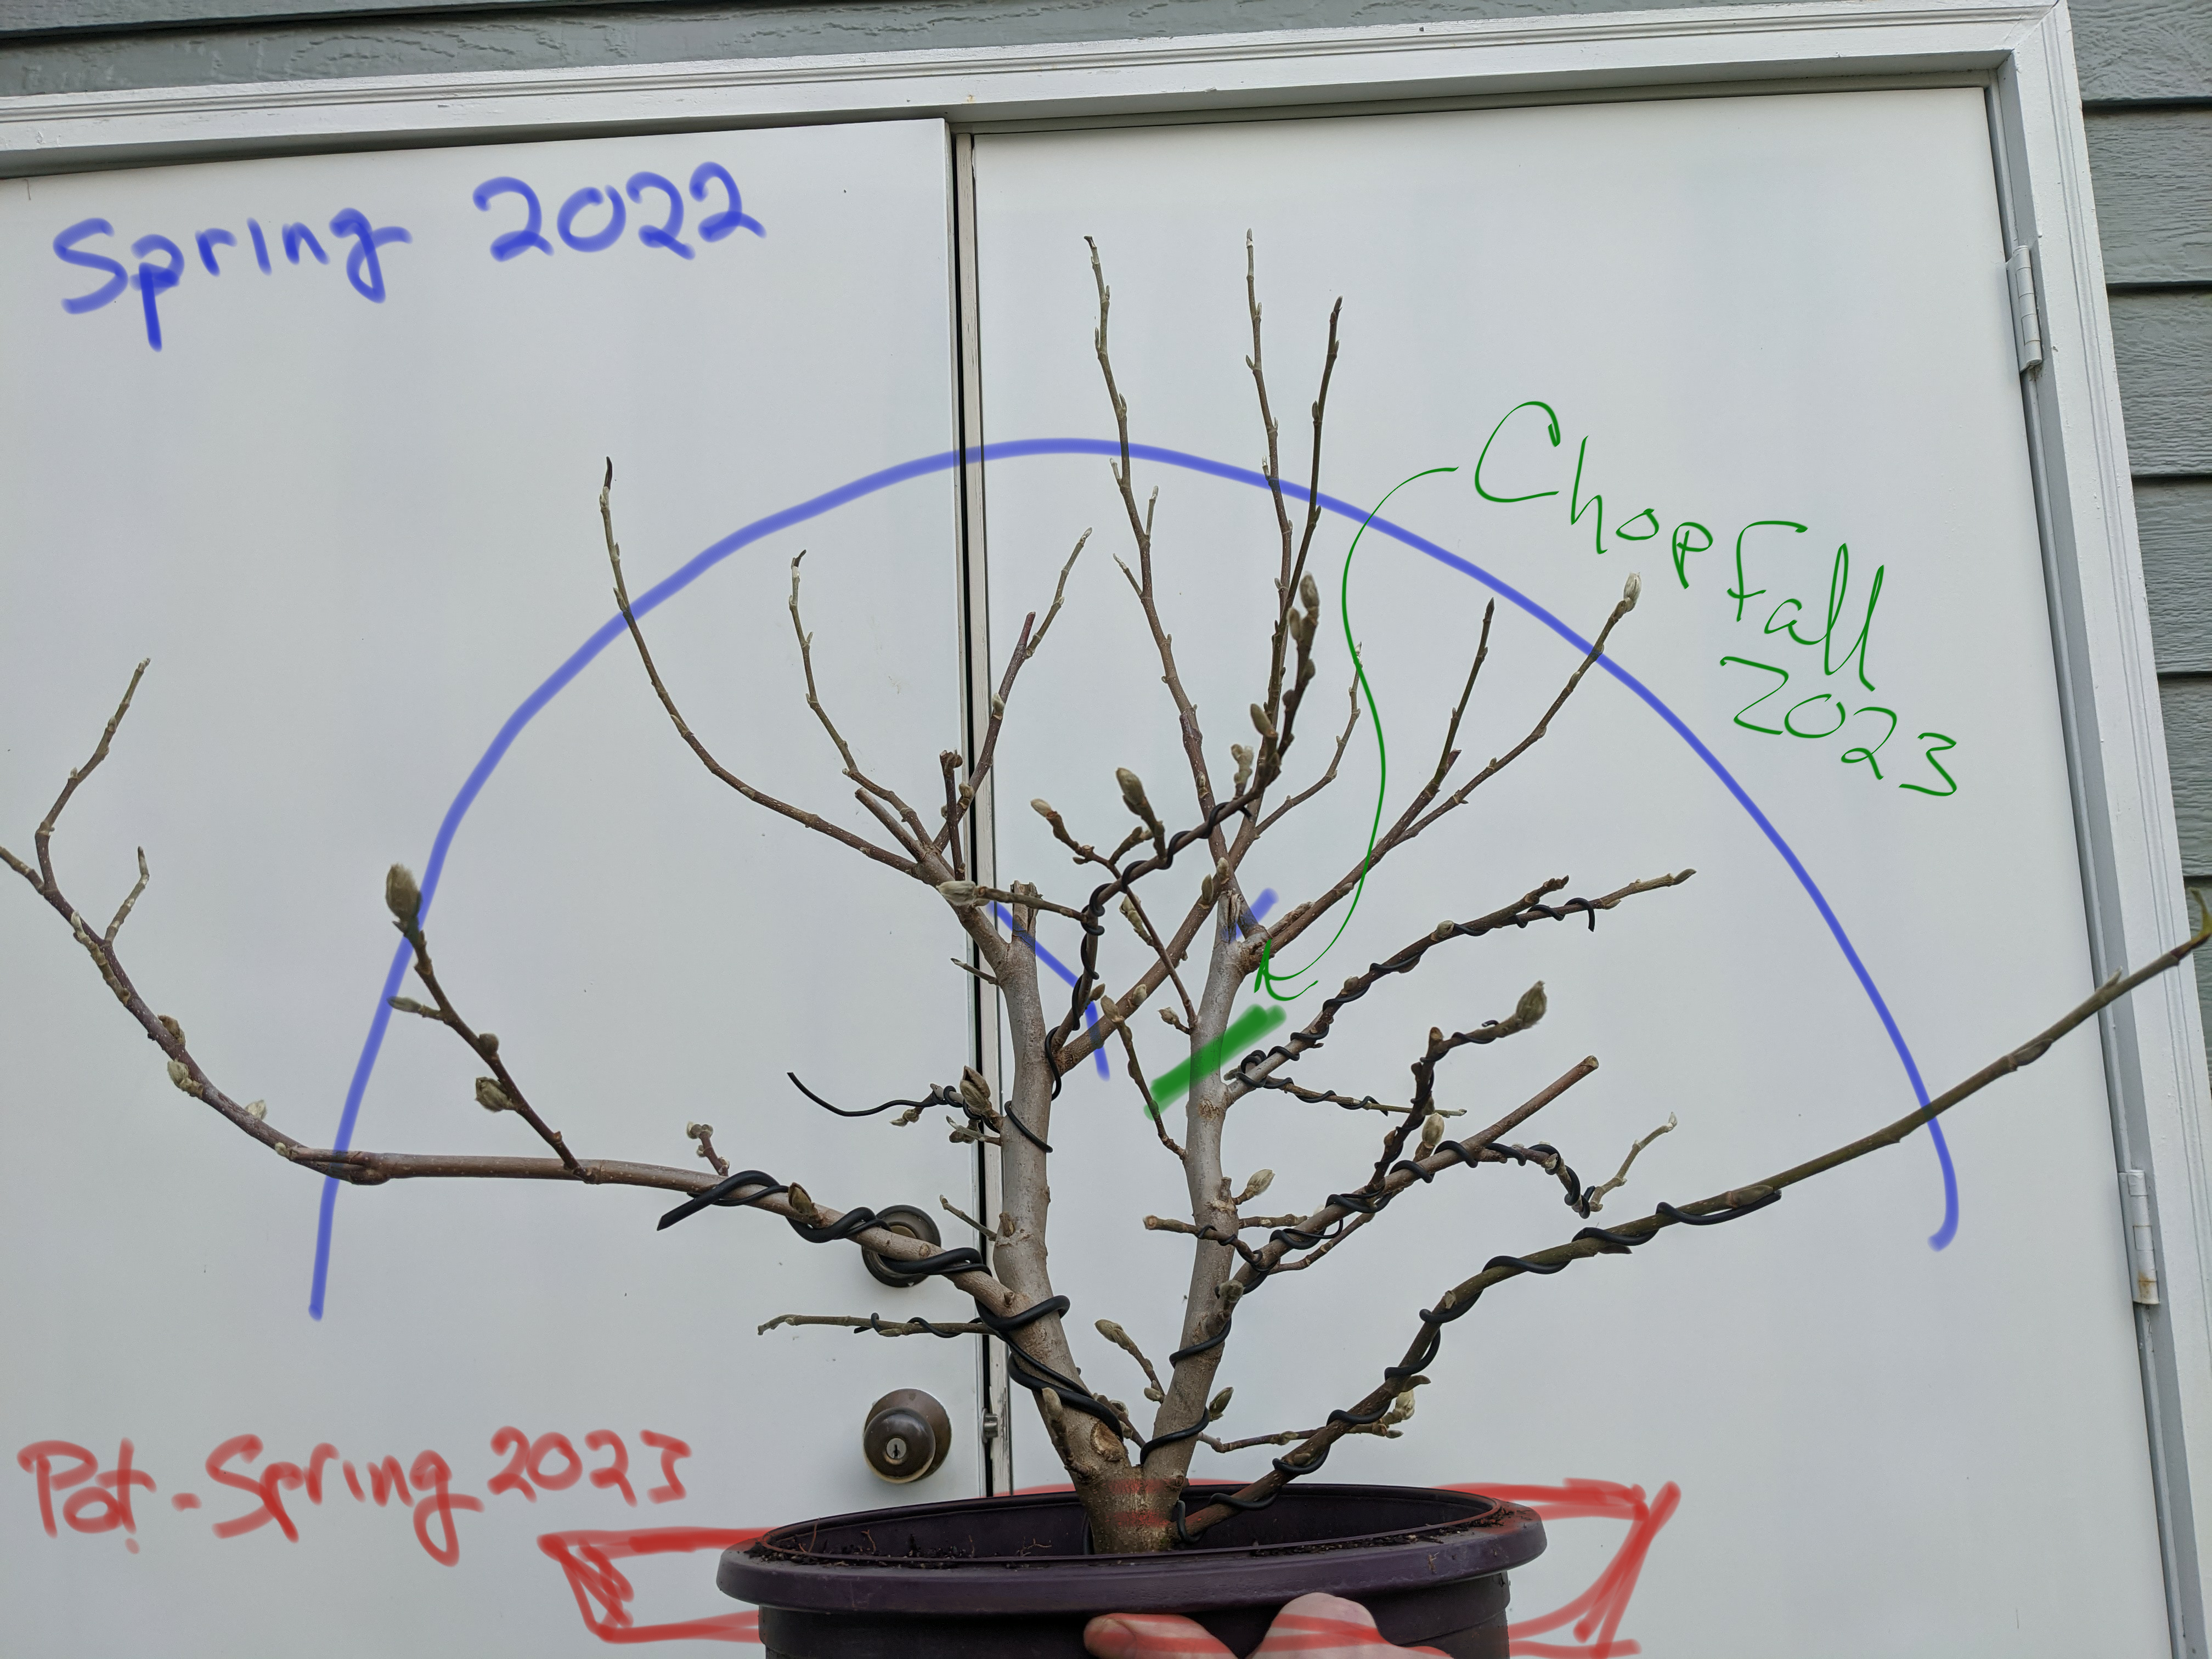 A multi-year plan to turn a nursery stock plant into a bonsai